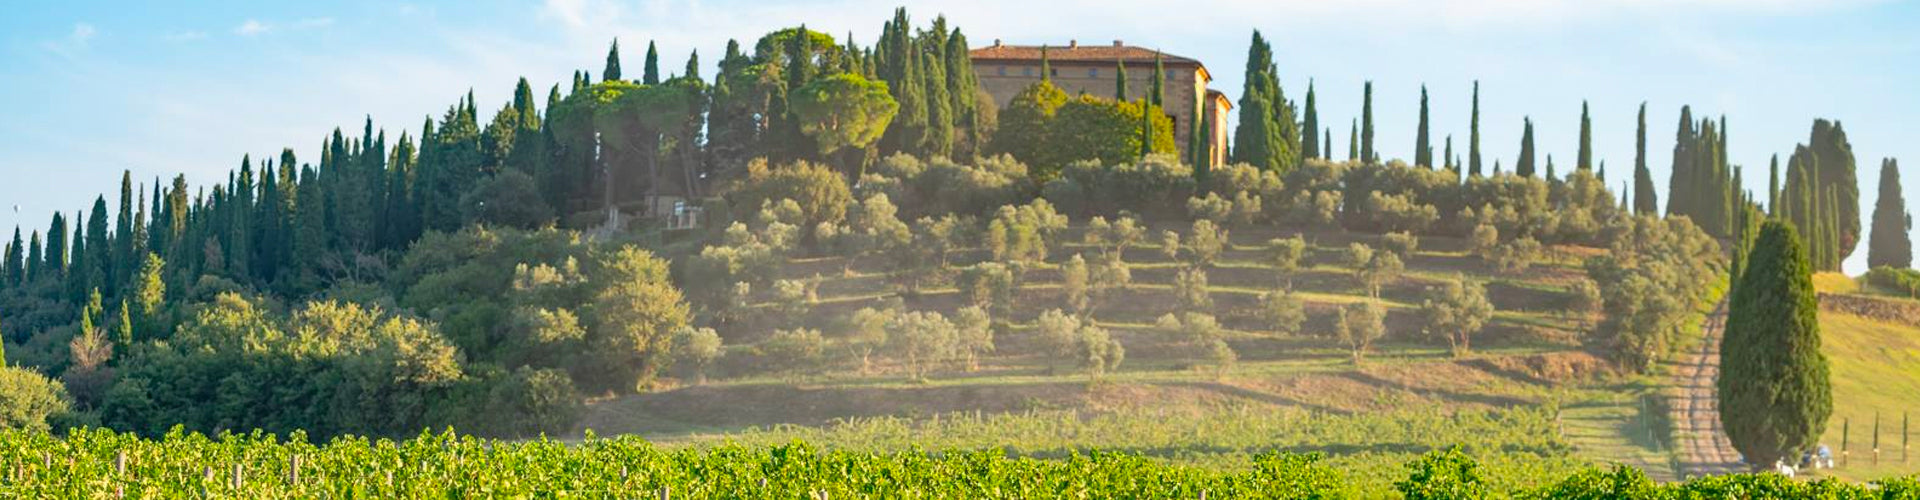 The hilltop Argiano Villa overlooking vineyards in Montalcino, Tuscany